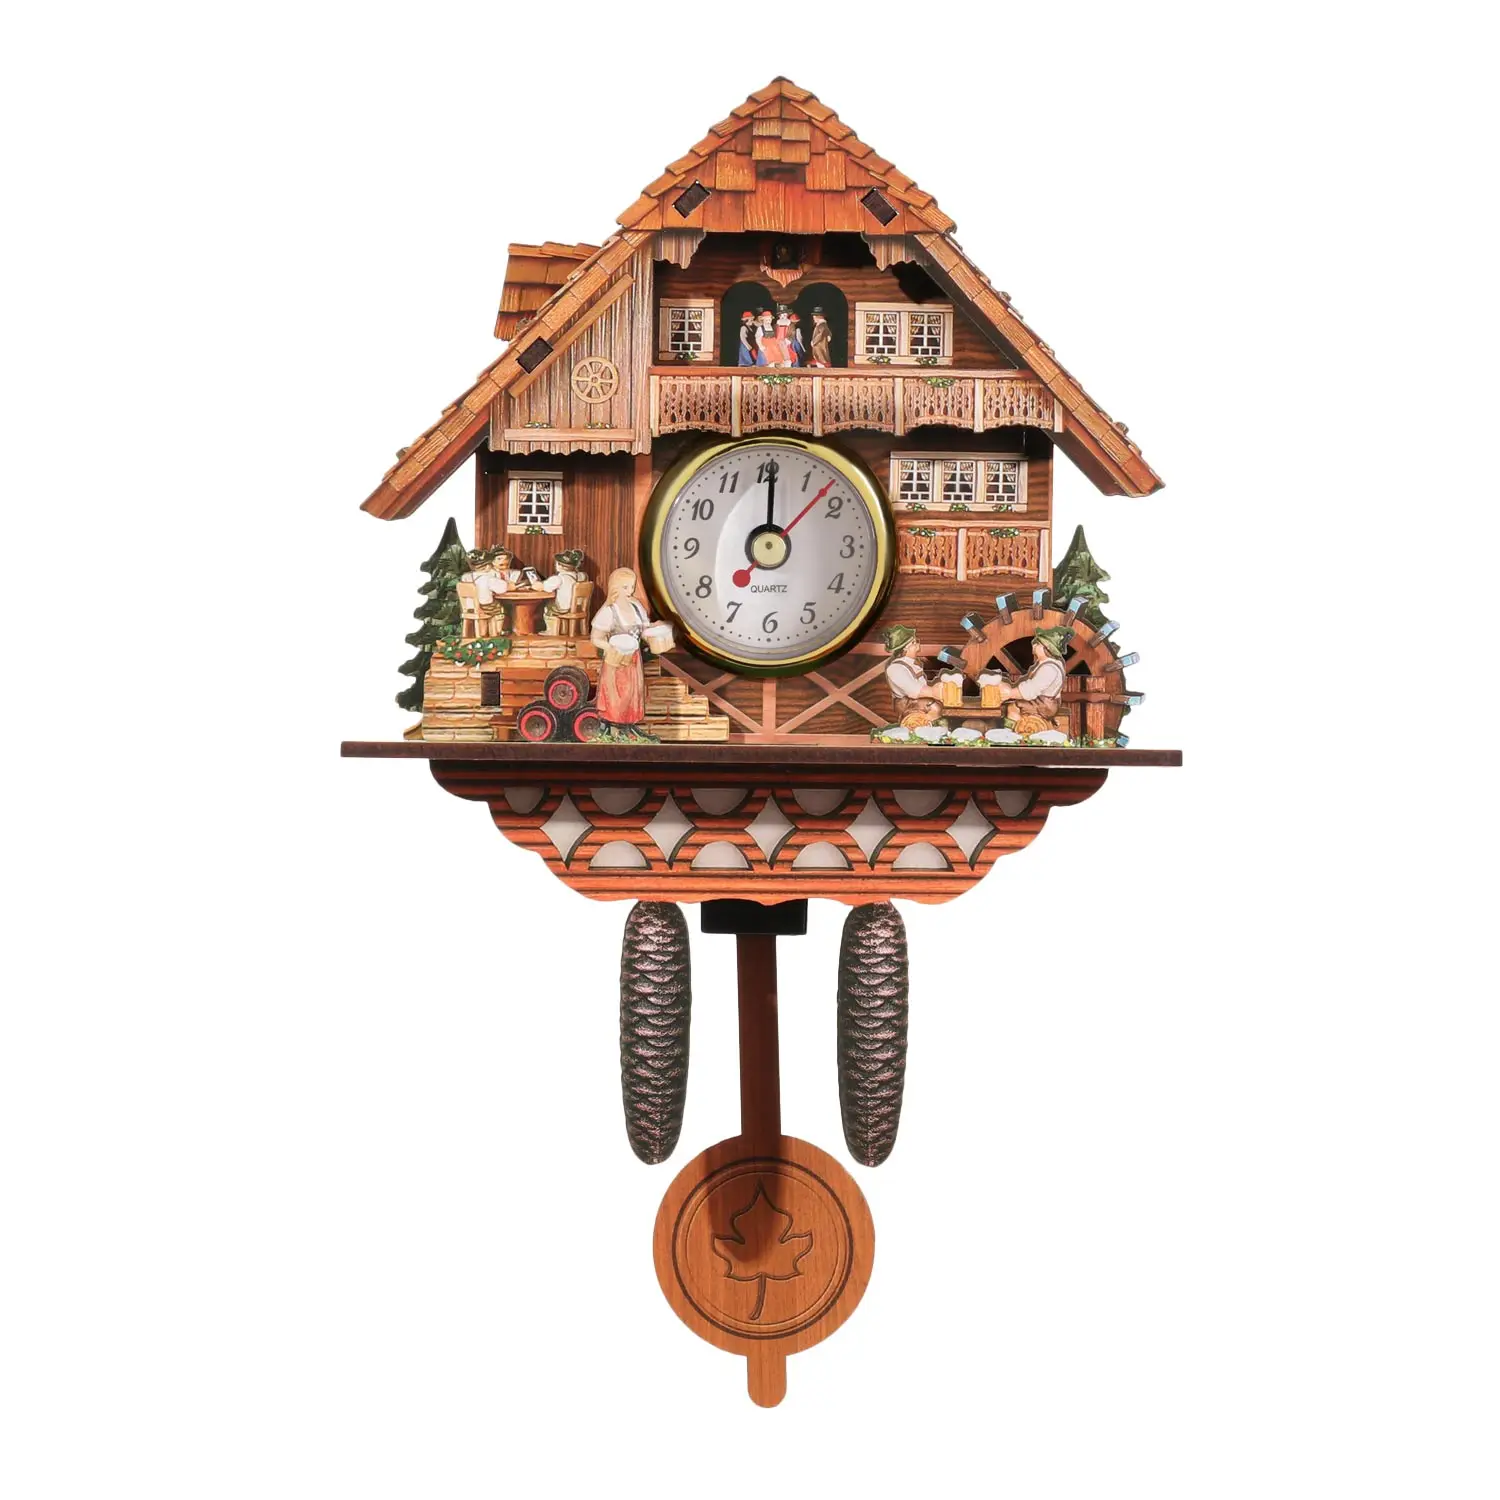 

1PC Retro Wood Wooden Cuckoo Clocks Quartz Wall Clock Handcraft Forest House Living Room Bedroom Home Decor Crafts